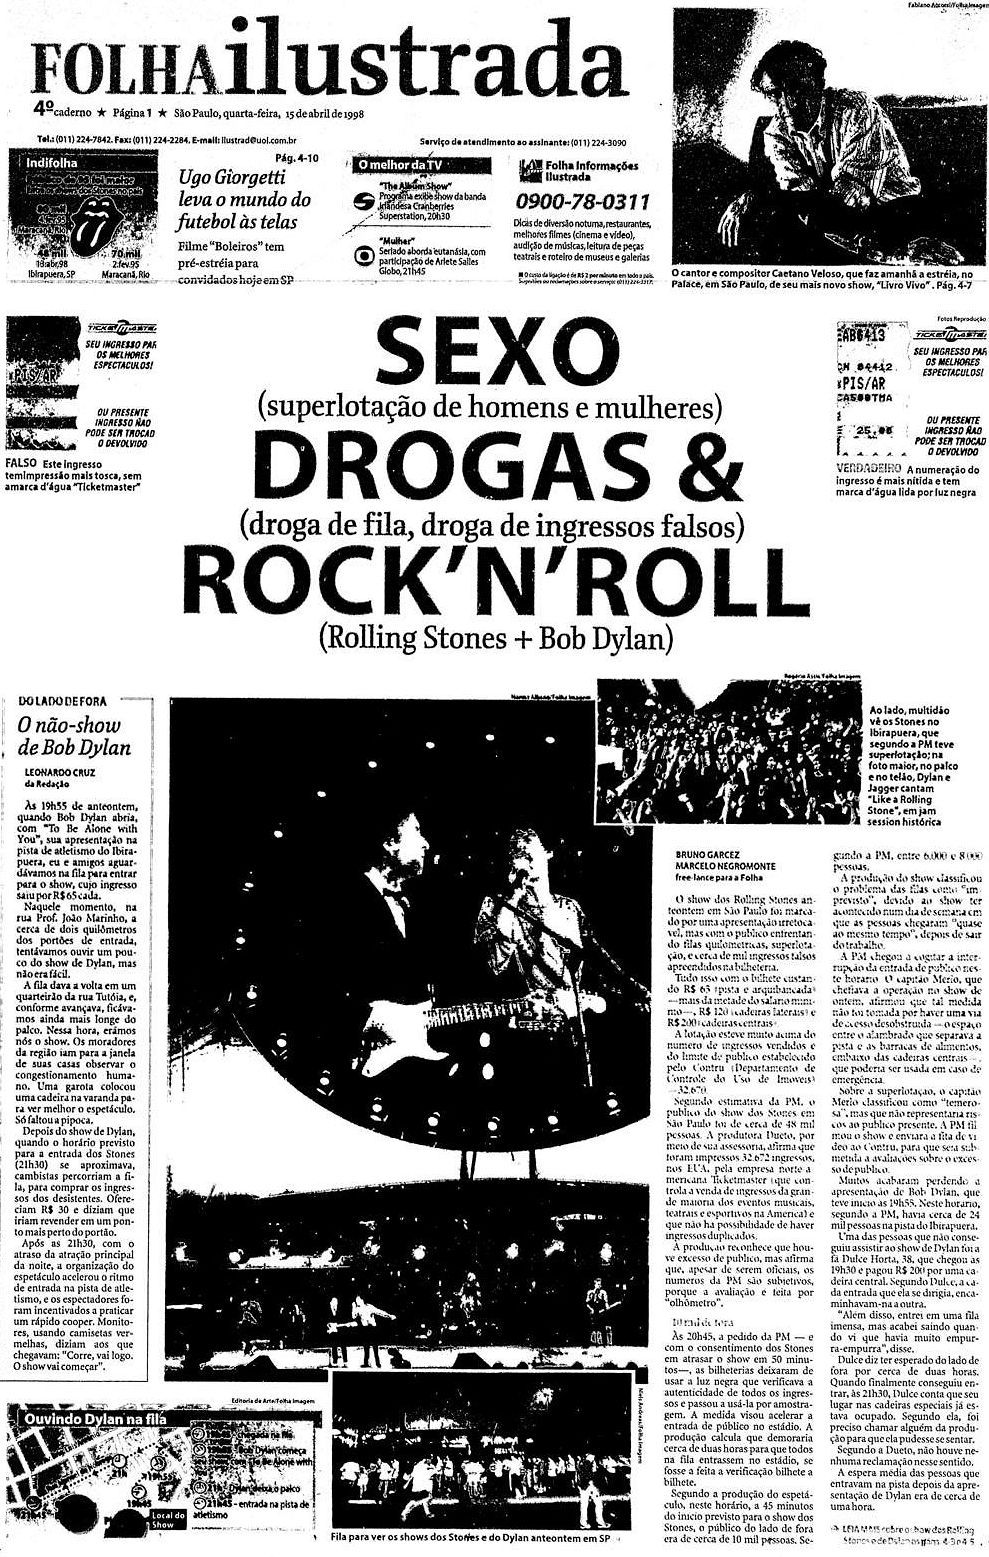 FOLHA DE SÃO PAULO 15 april 1998 Bob Dylan front cover